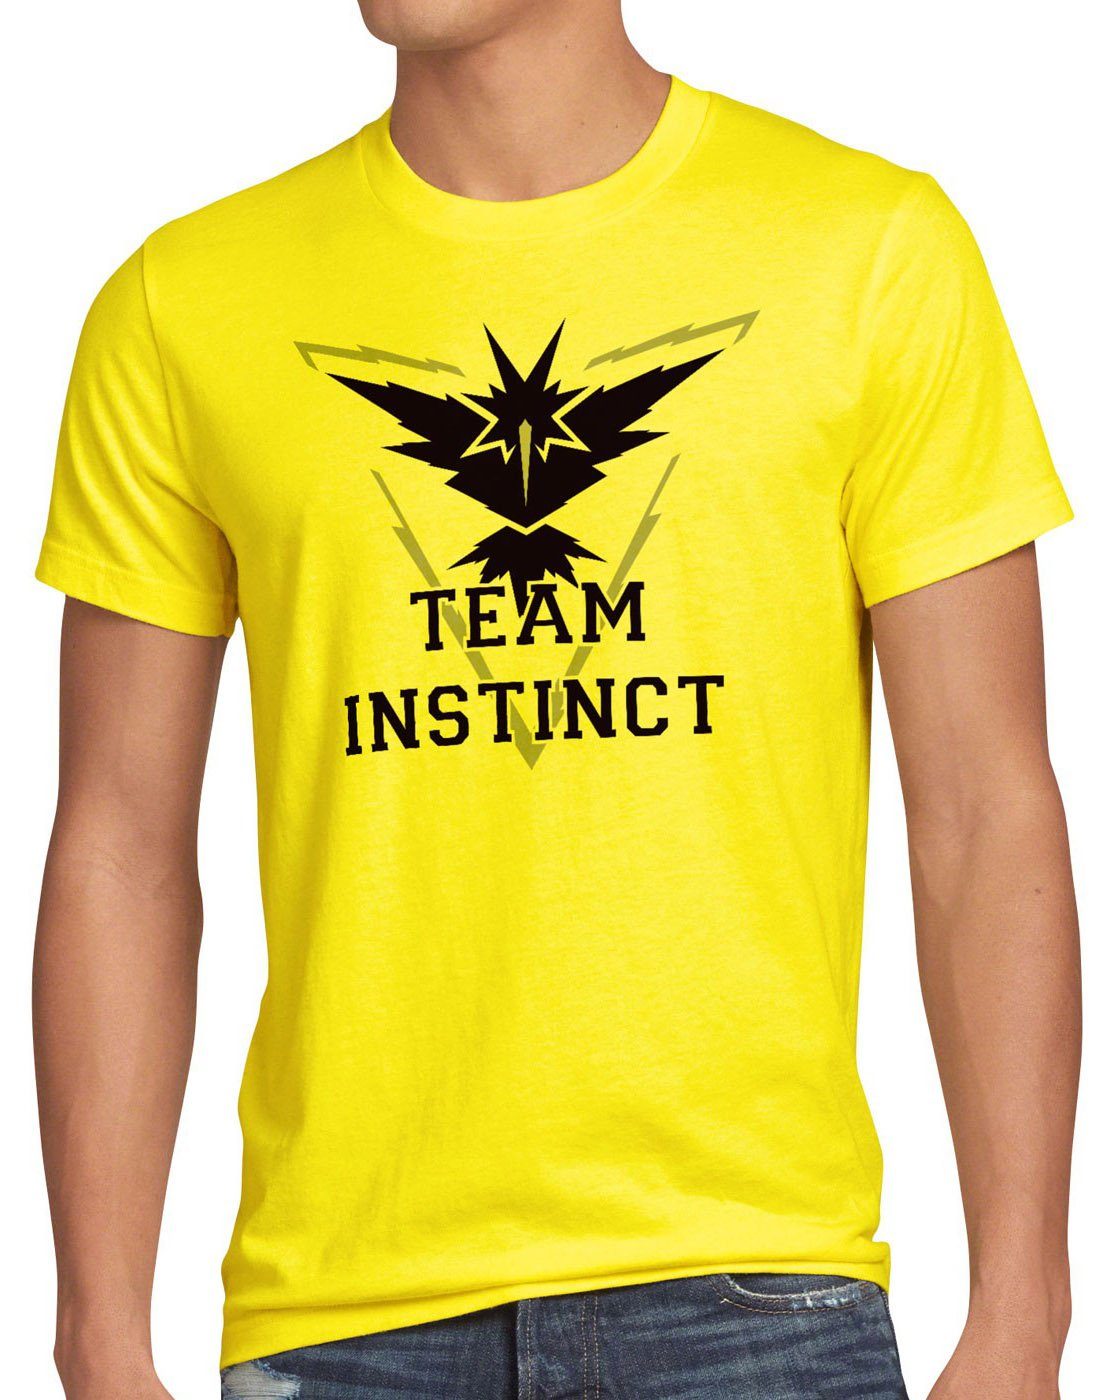 poke Instinct poeball gelb instinkt Print-Shirt intuition Team boy game Herren T-Shirt style3 arena